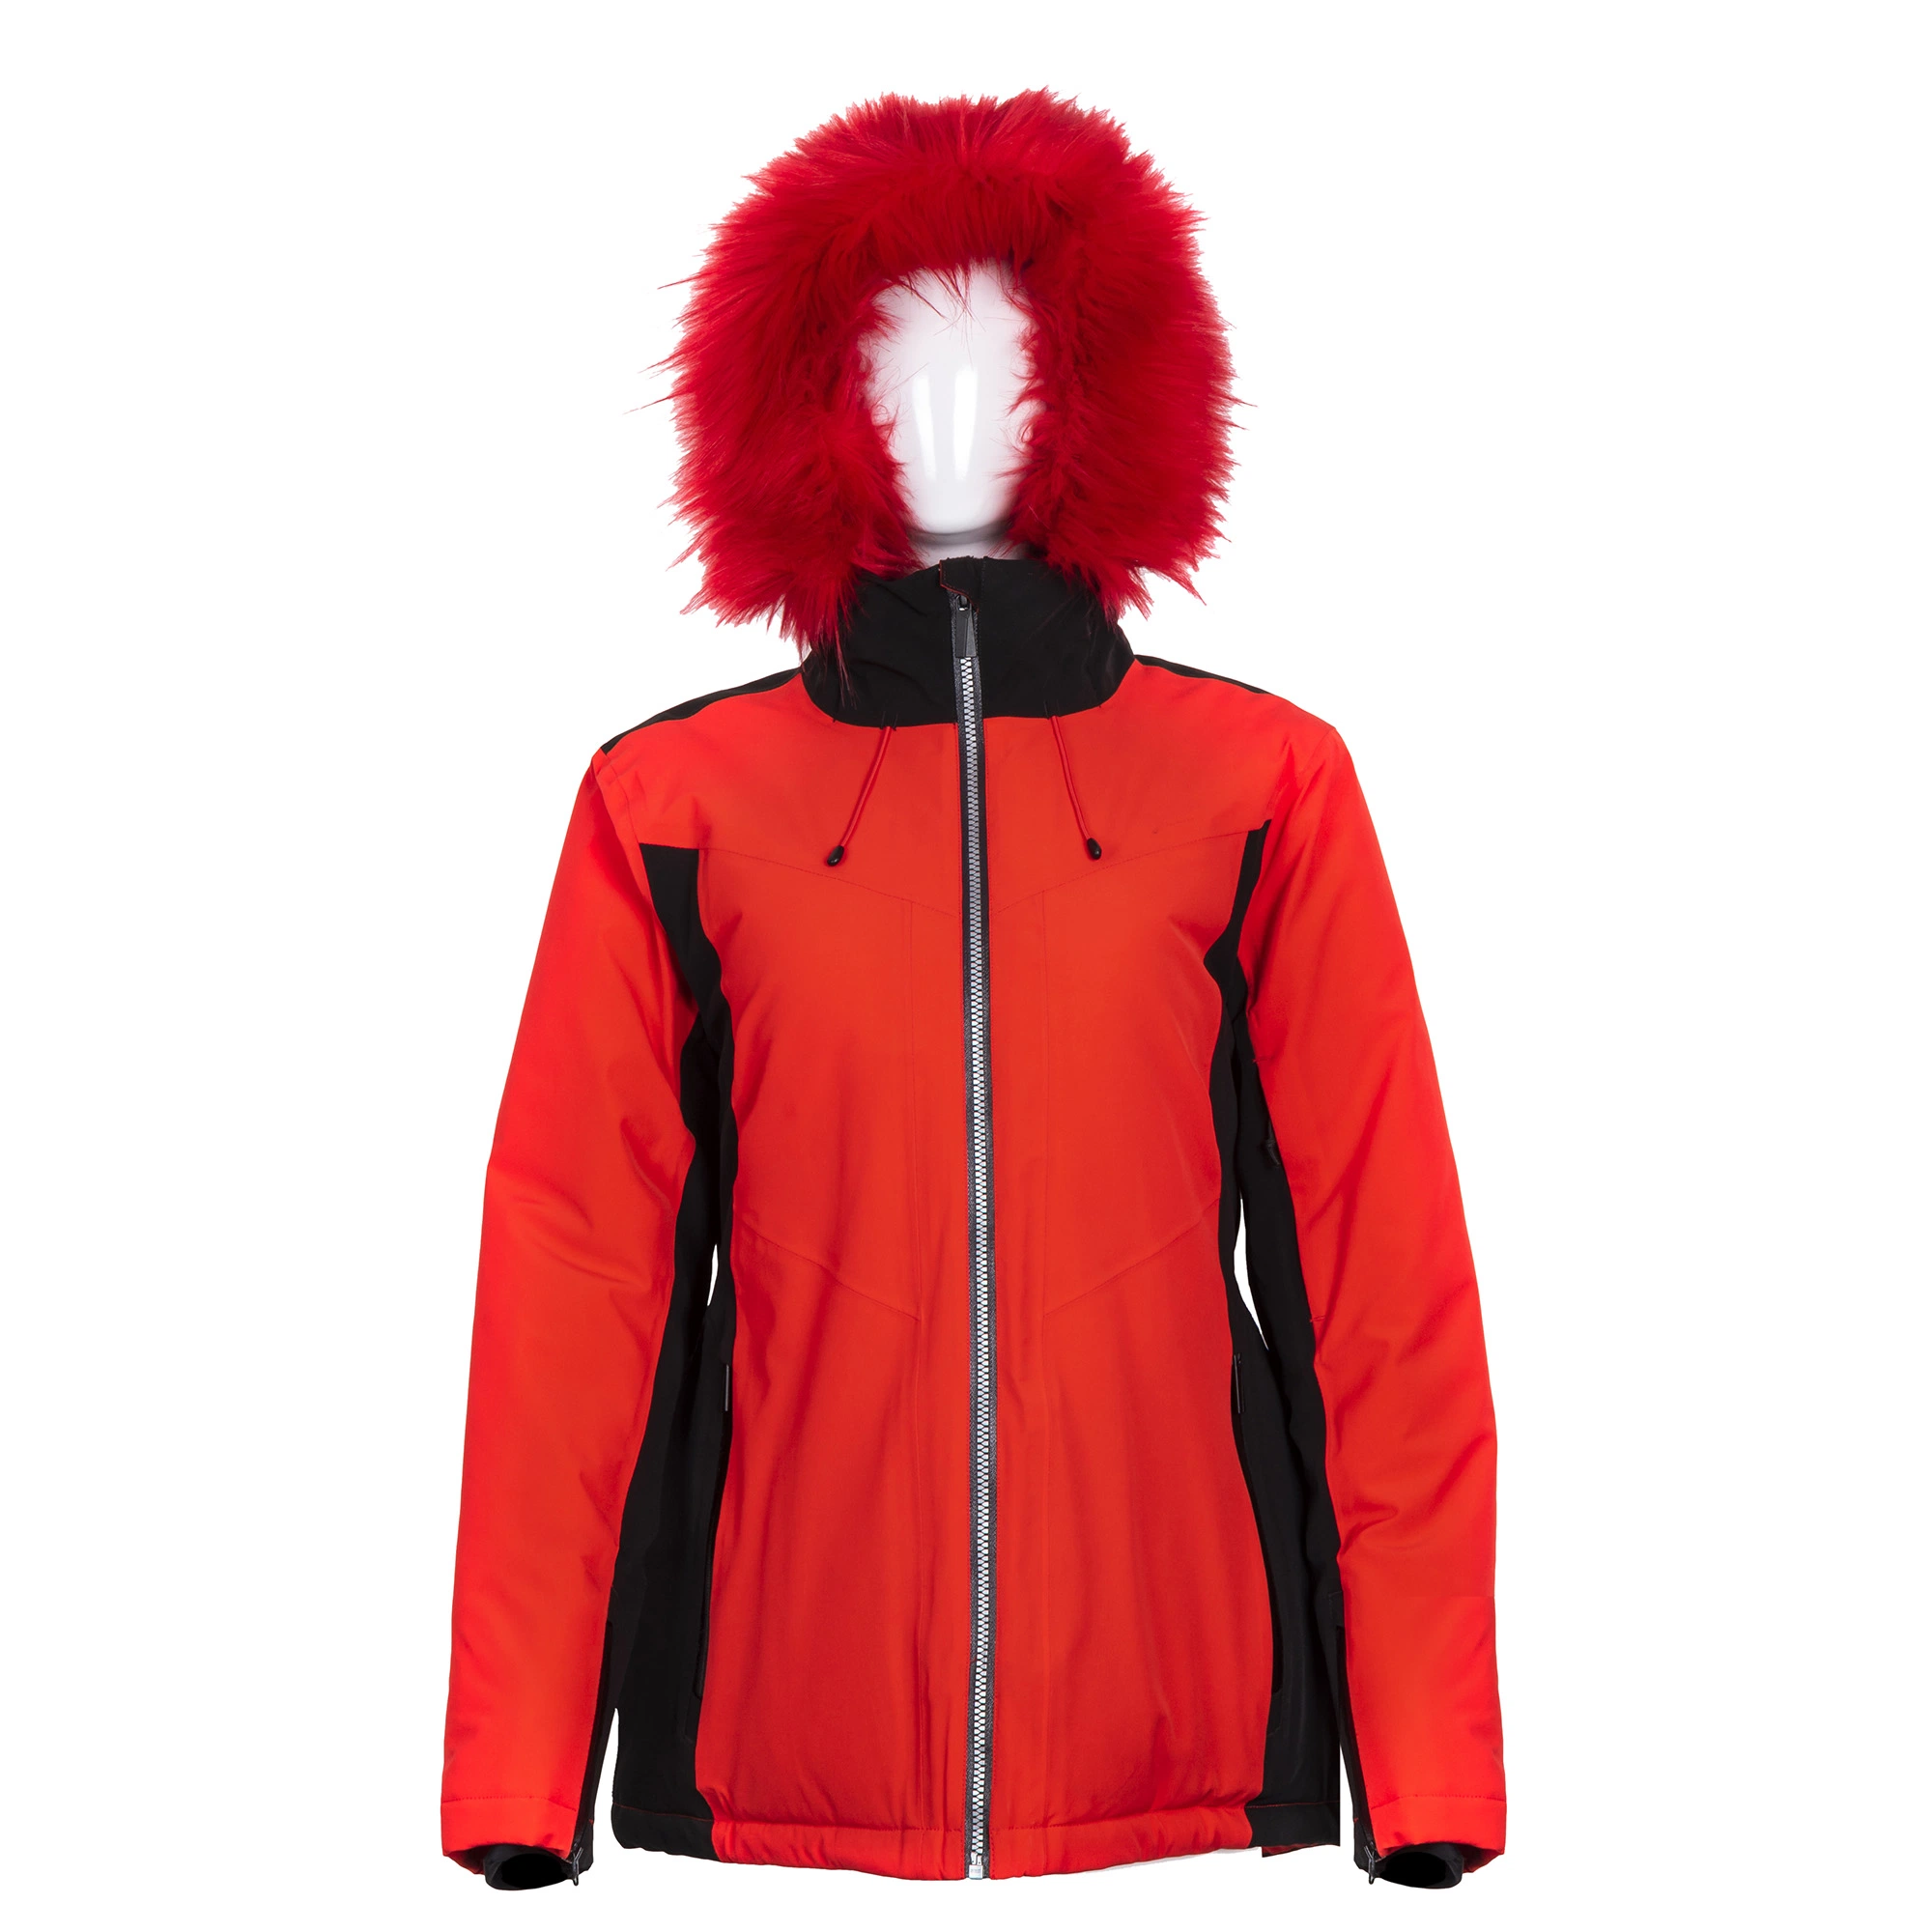 Fuzhou Fashion Flying Women's Fashion Winter Jacket Suit Ski Wear